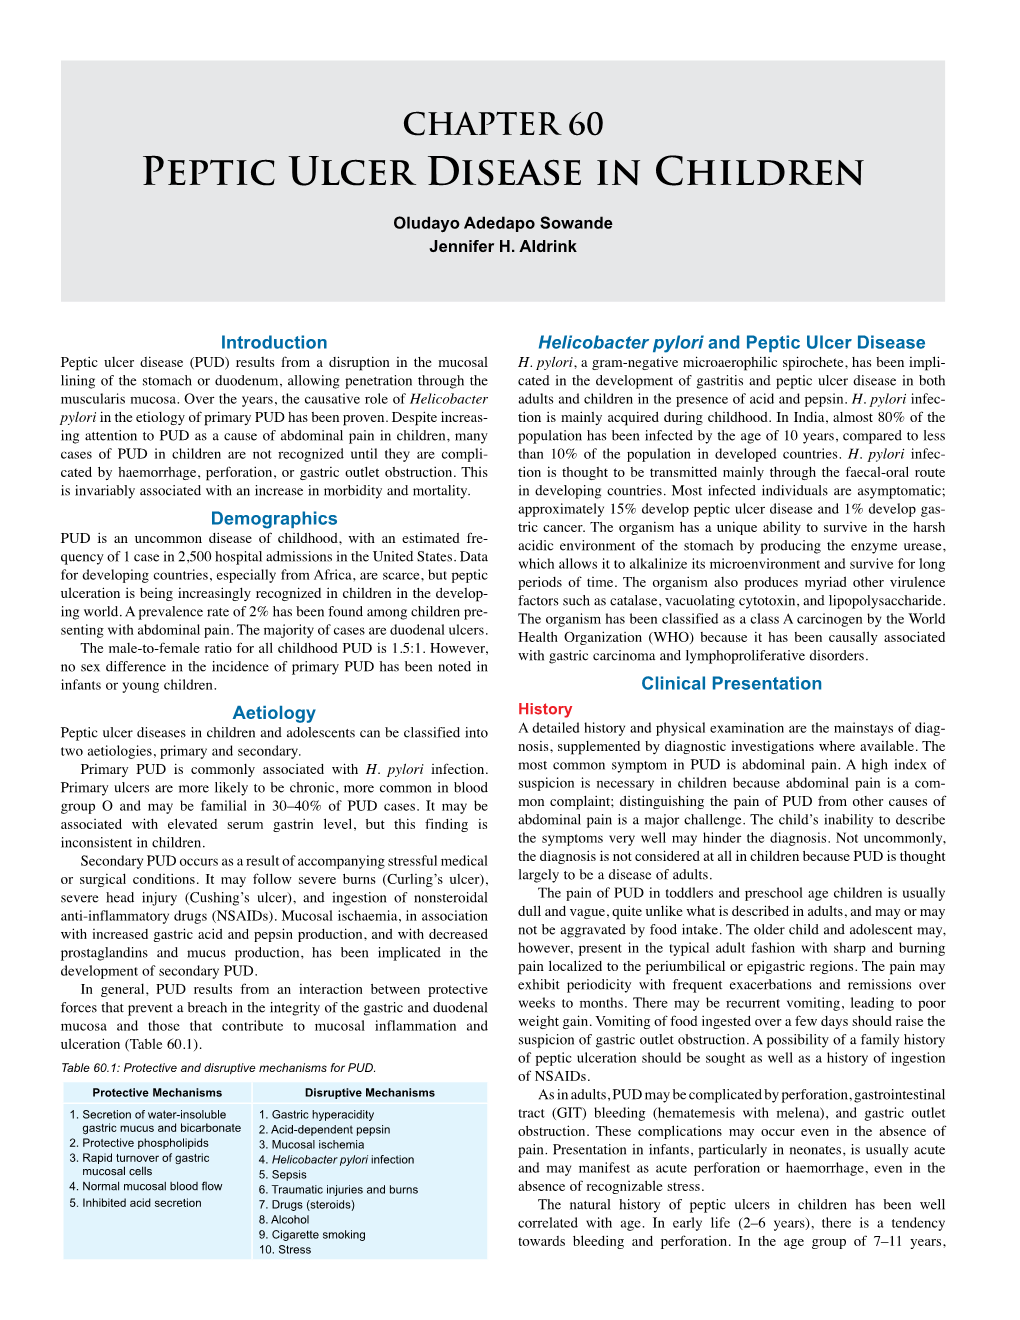 60. Peptic Ulcer Disease in Children